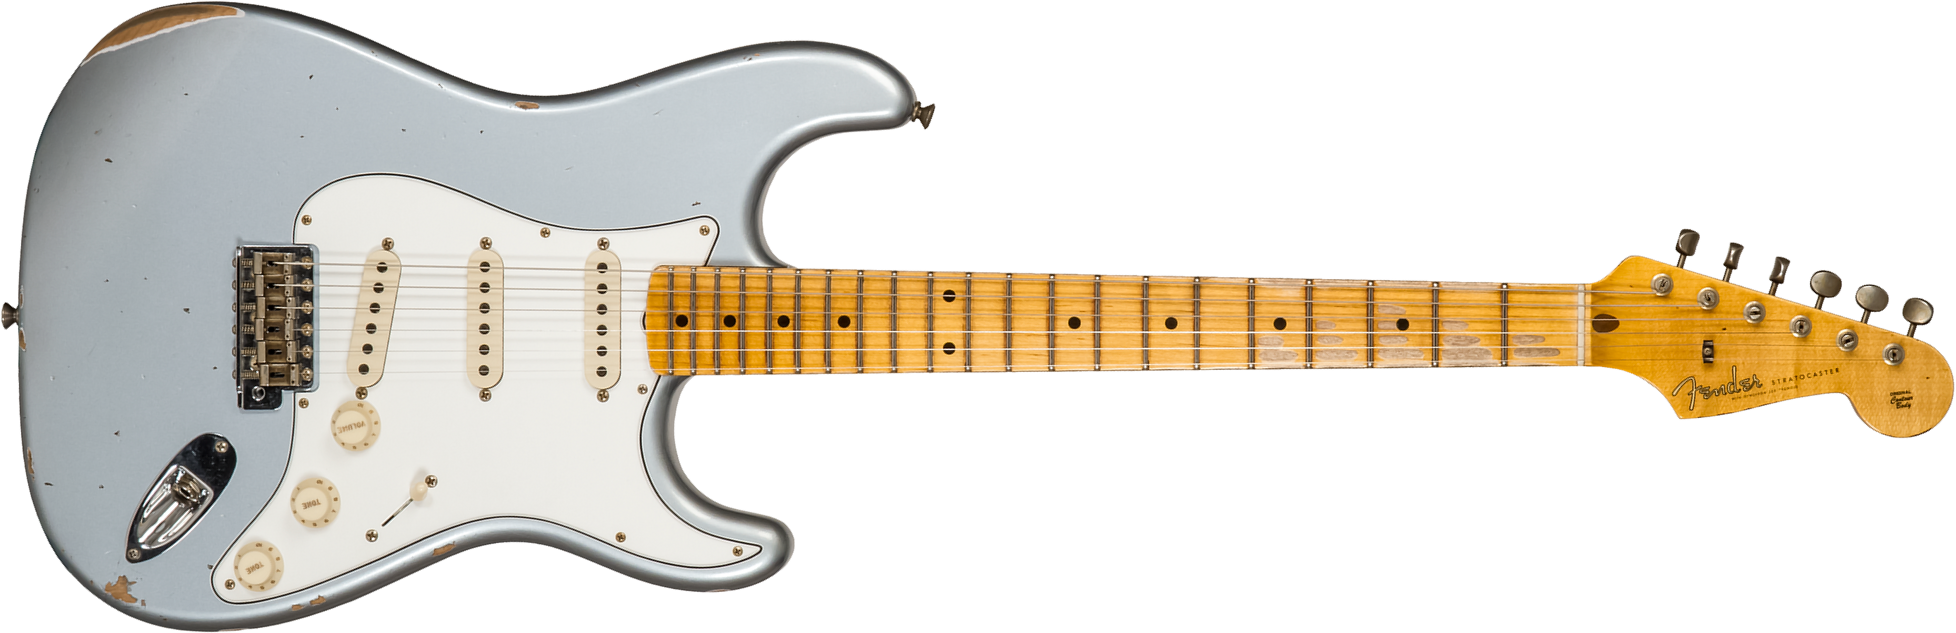 Fender Custom Shop Strat Tomatillo Special 3s Trem Mn #cz571096 - Relic Aged Ice Blue Metallic - Guitare Électrique Forme Str - Main picture